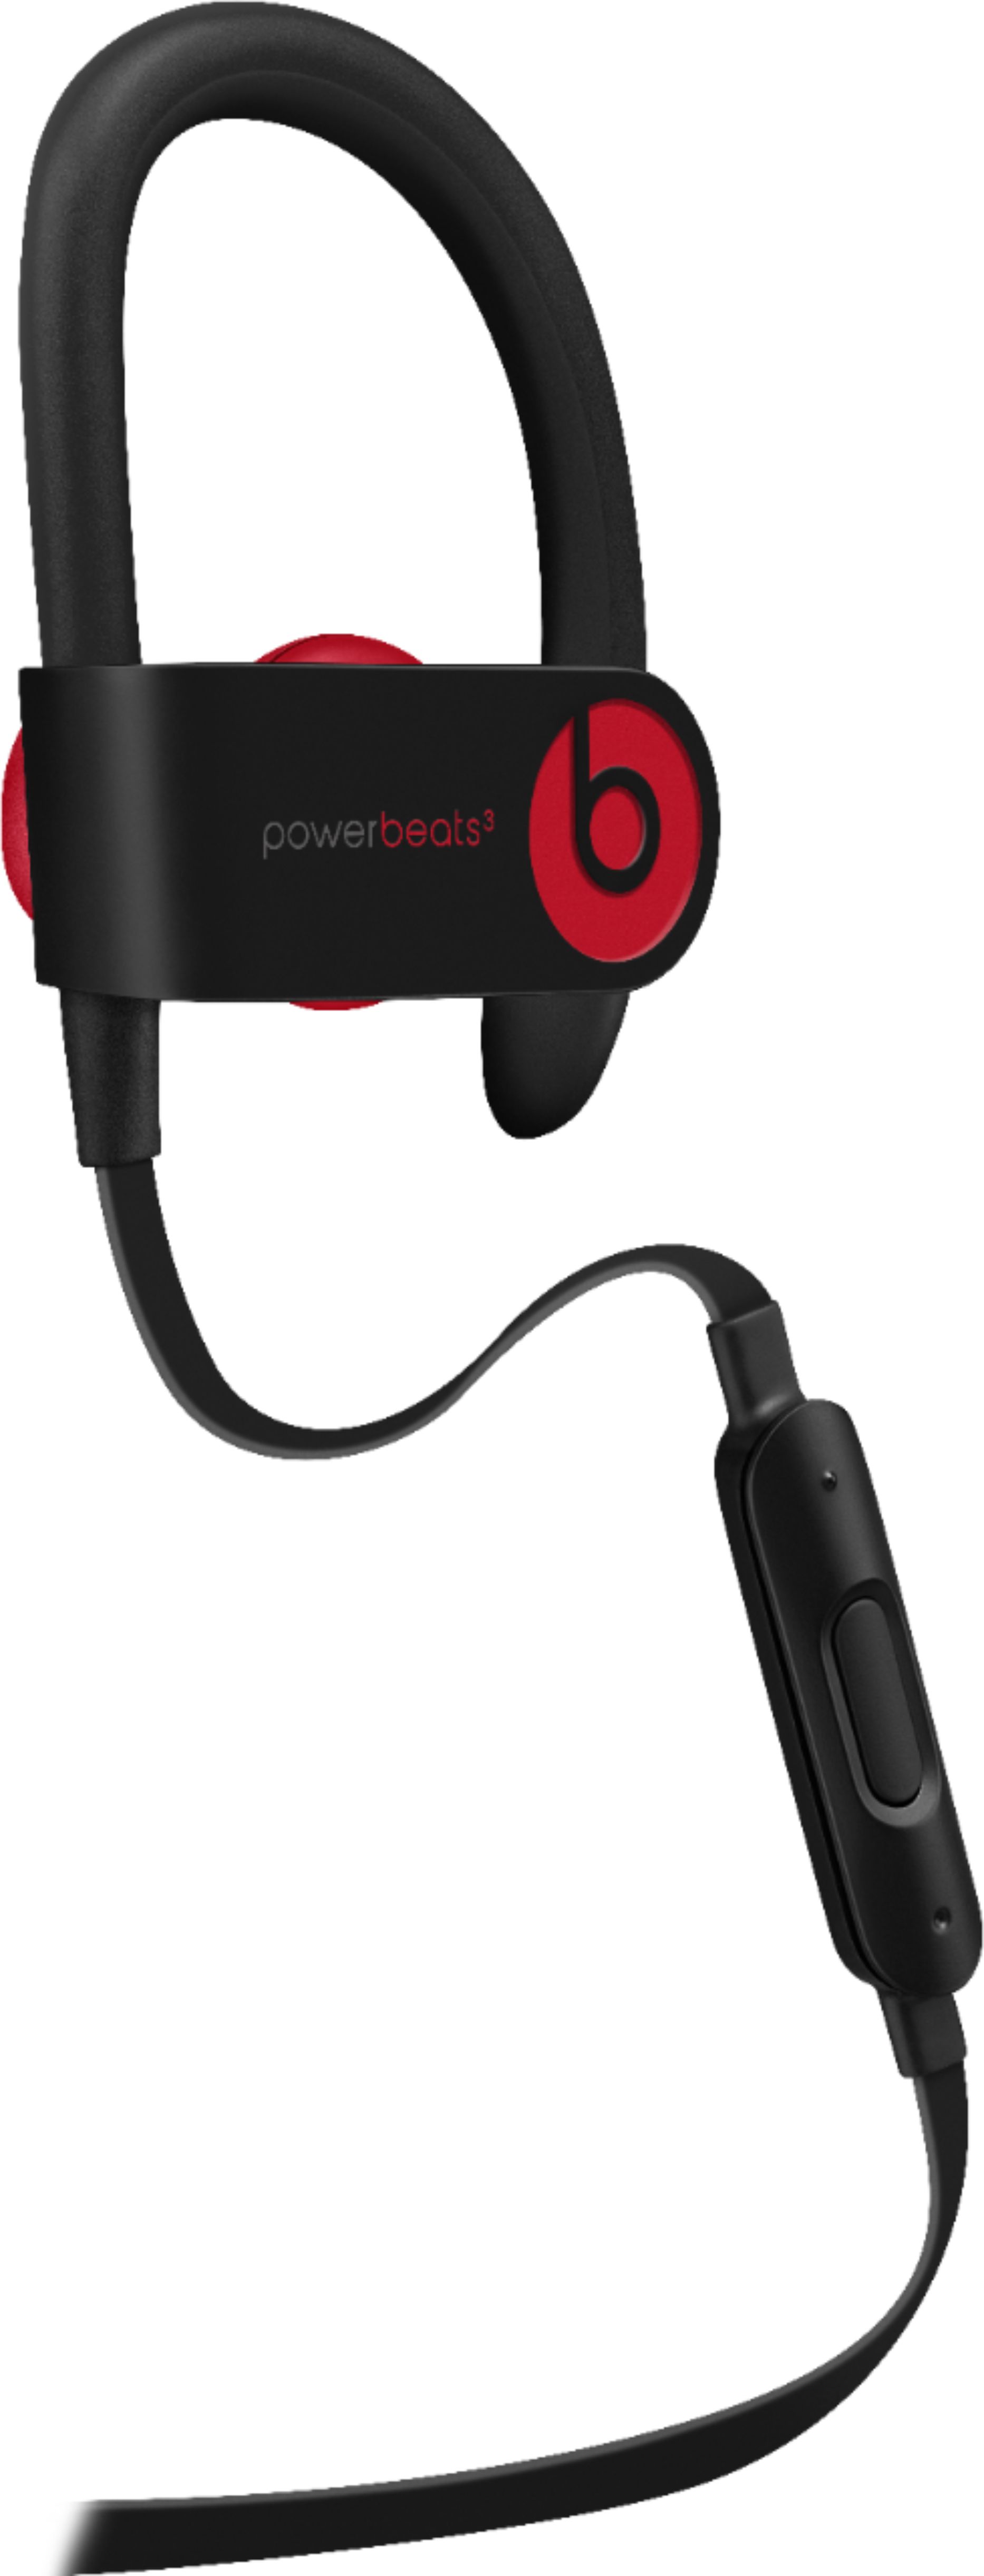 powerbeats 3 red black